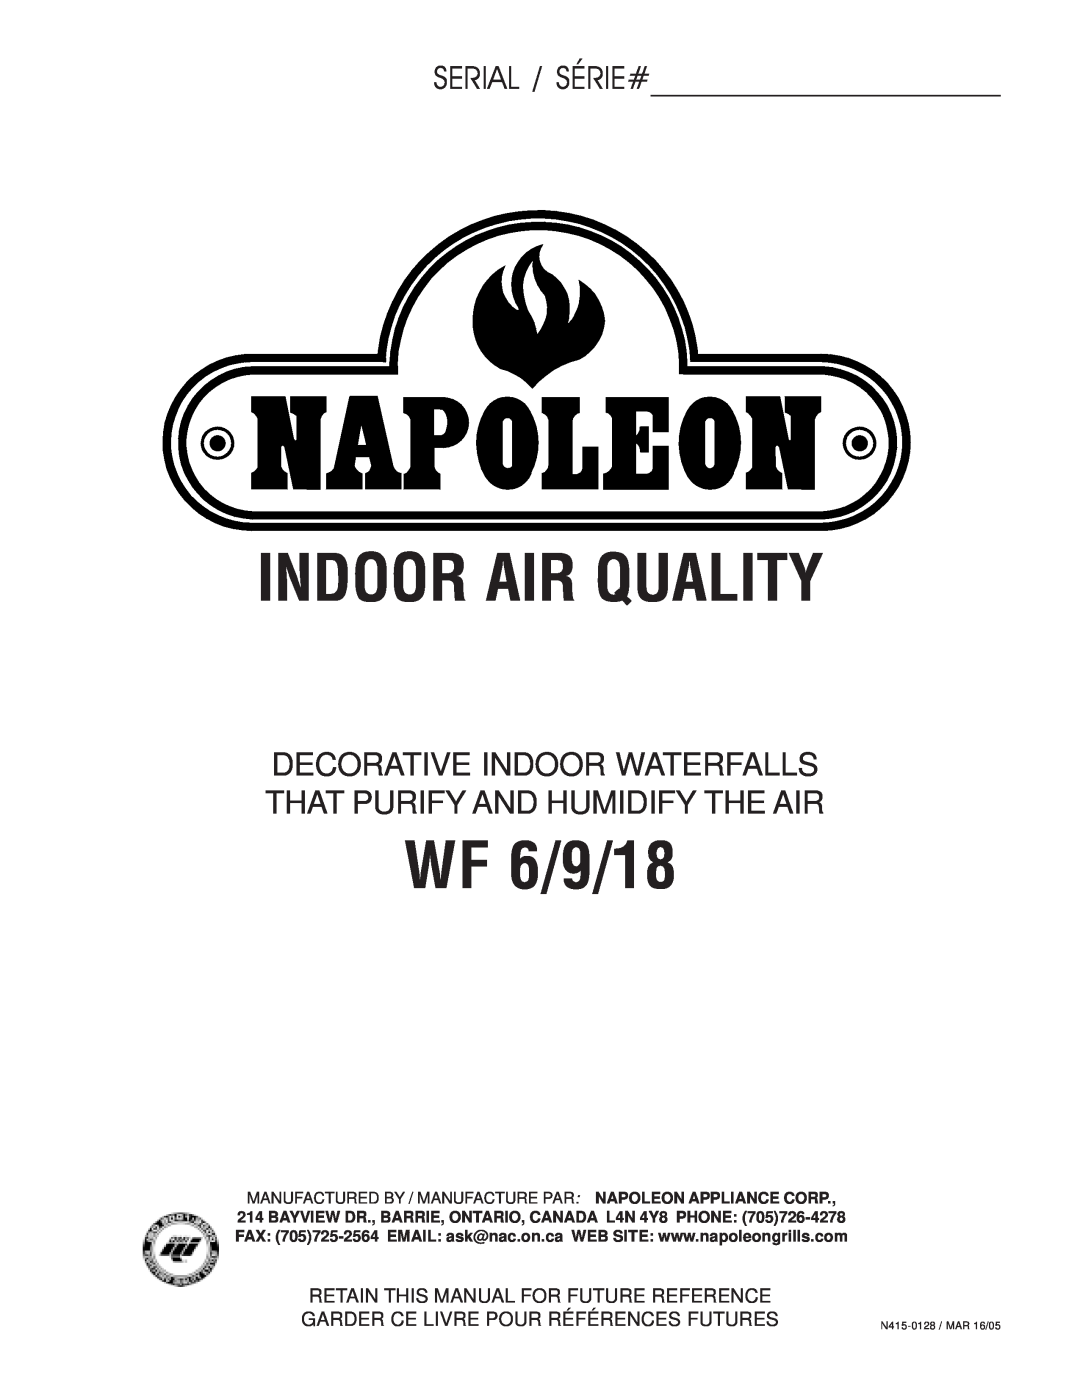 Napoleon Fireplaces WF 6/9/18 manual Indoor Air Quality, Serial / Série#, Decorative Indoor Waterfalls 